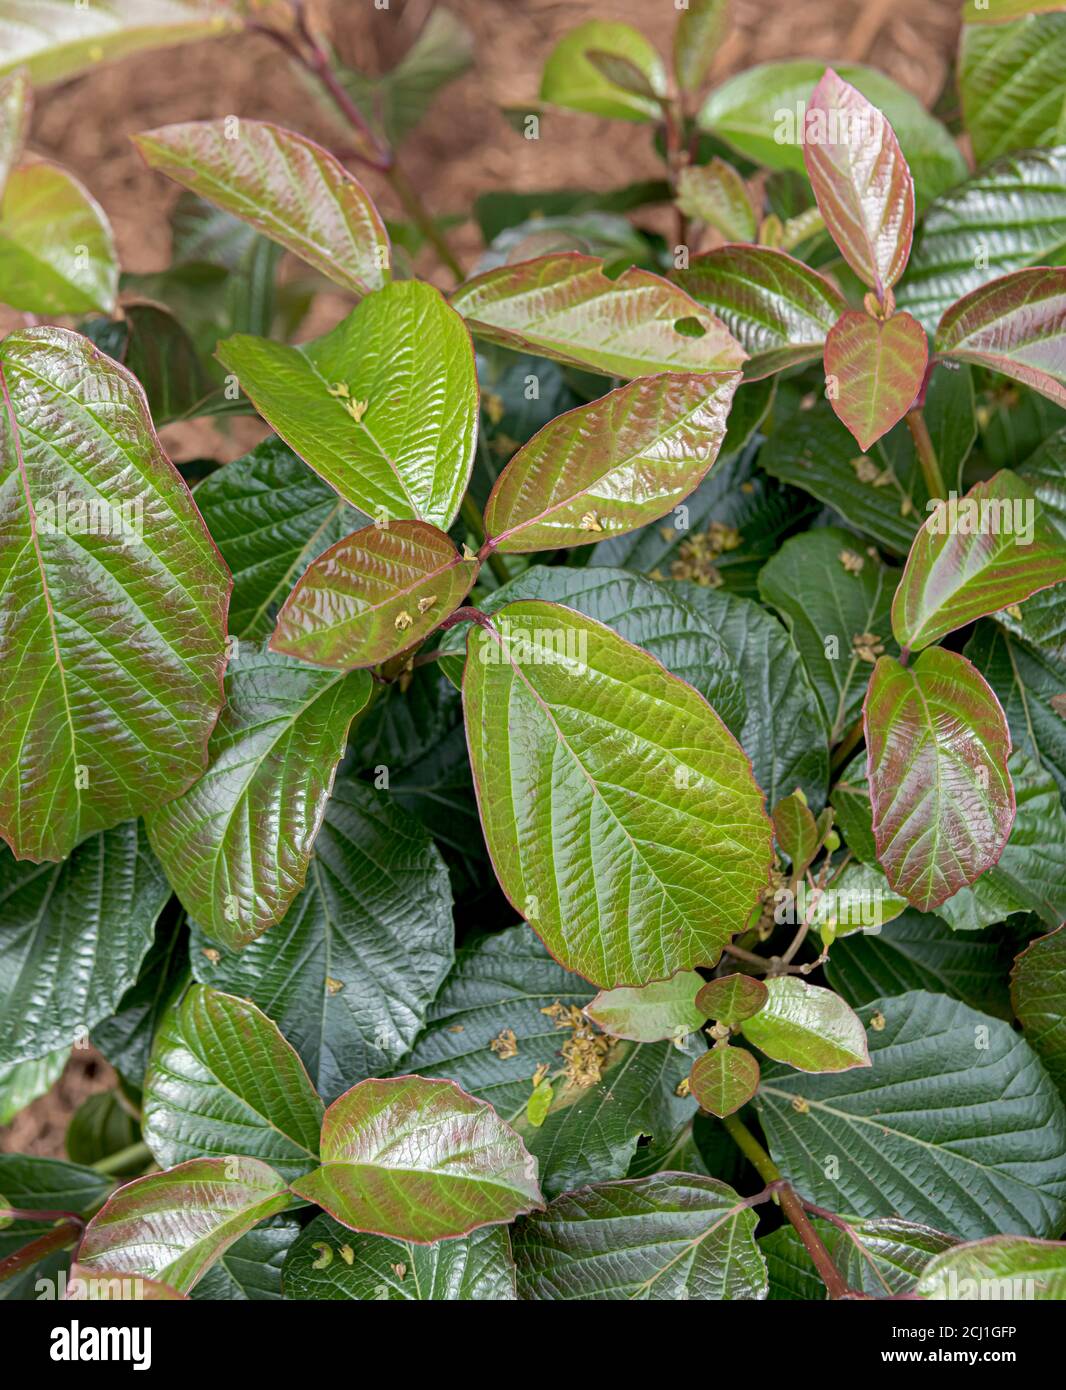 Viburnum (Viburnum 'Shiny Dancer', Viburnum Shiny Dancer), leaves of cultivar Shiny Dancer Stock Photo